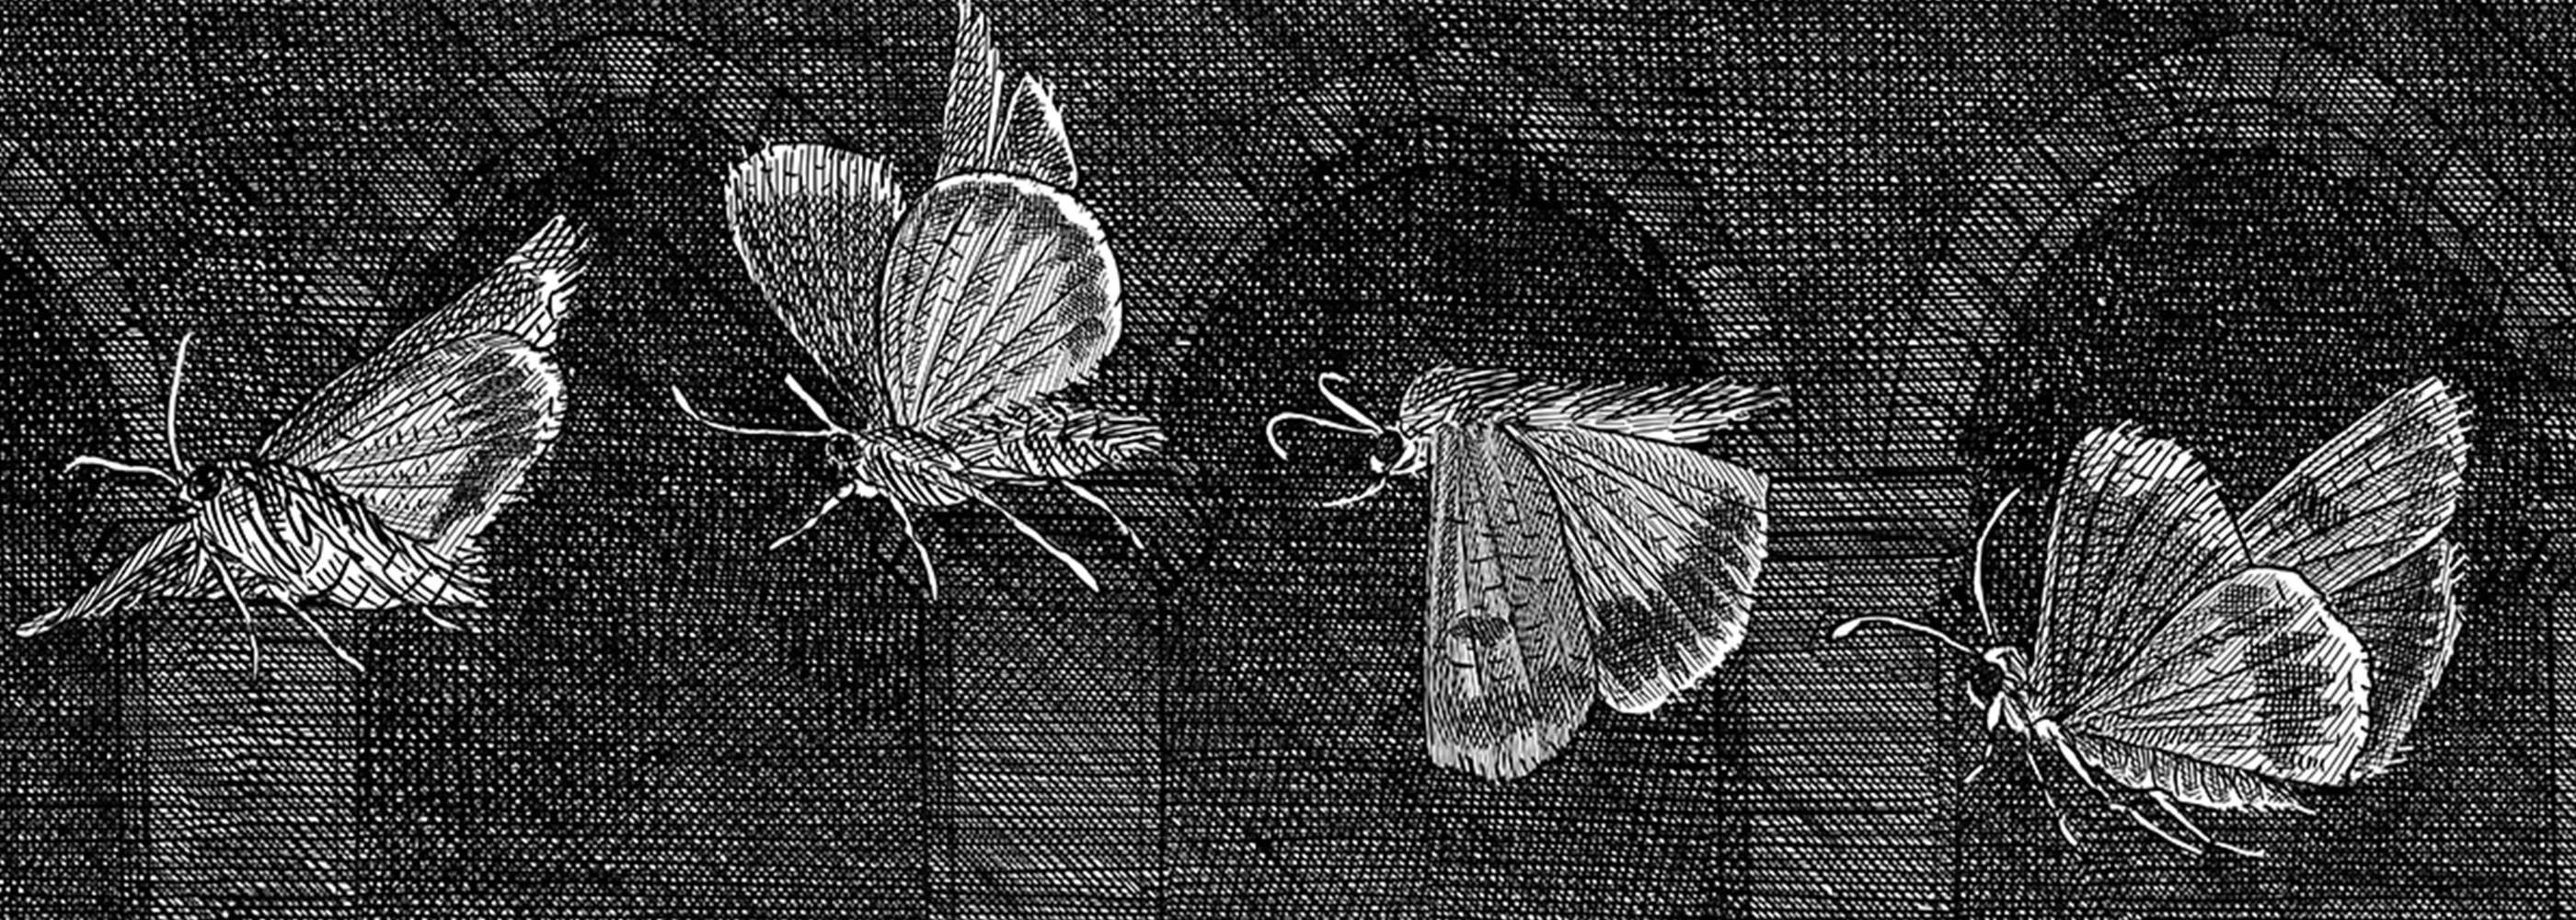 The moth header image